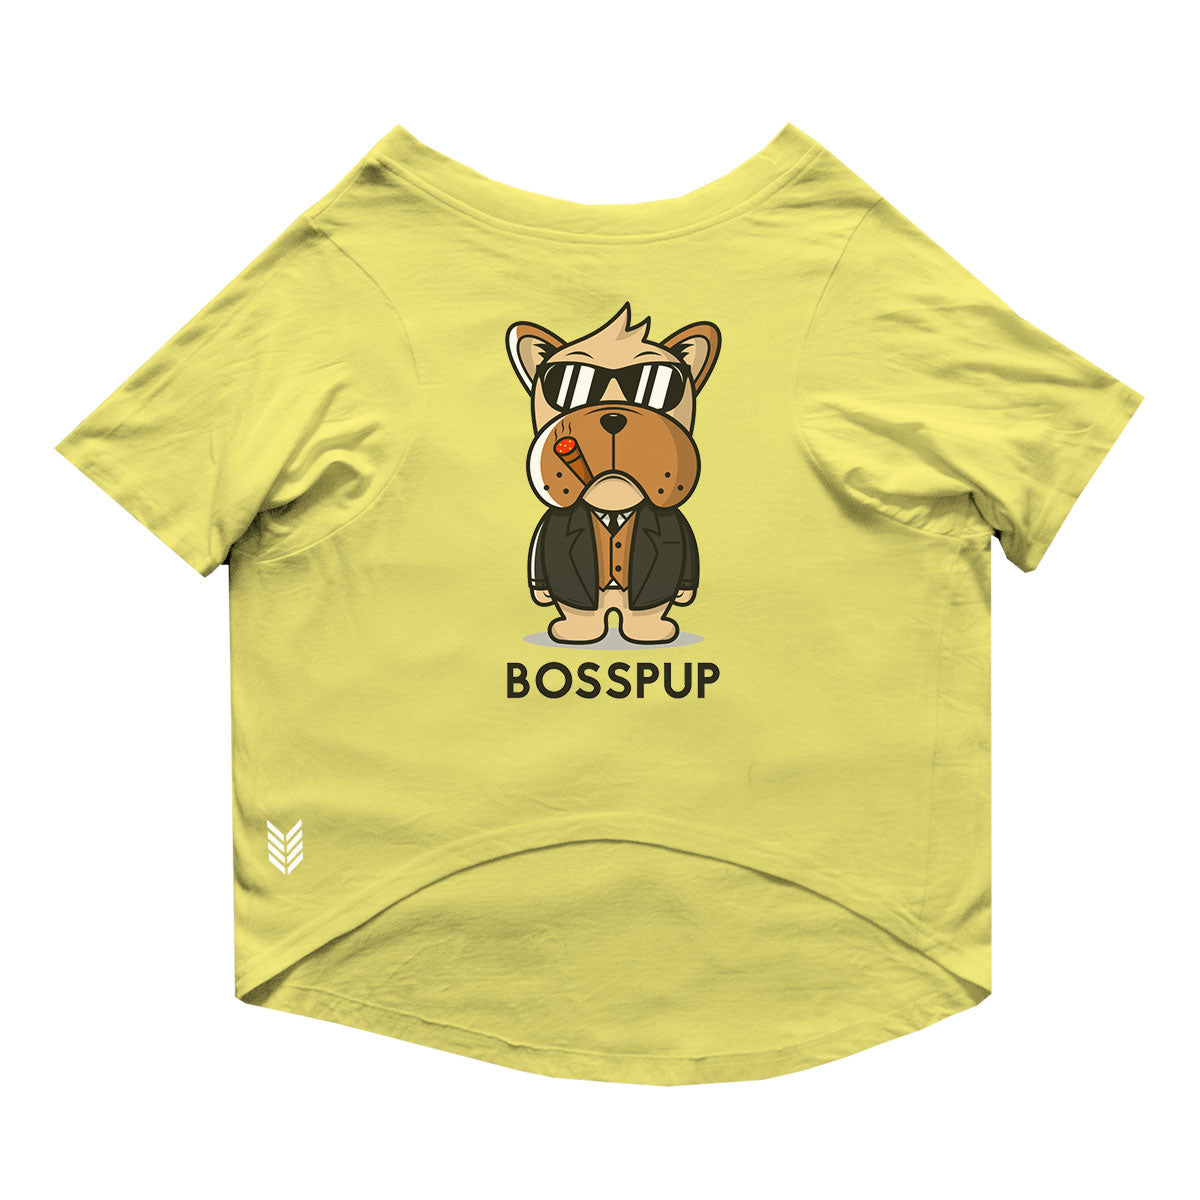 Ruse - Basic Crew Neck Boss pup Printed Half Sleeves Dog Tee